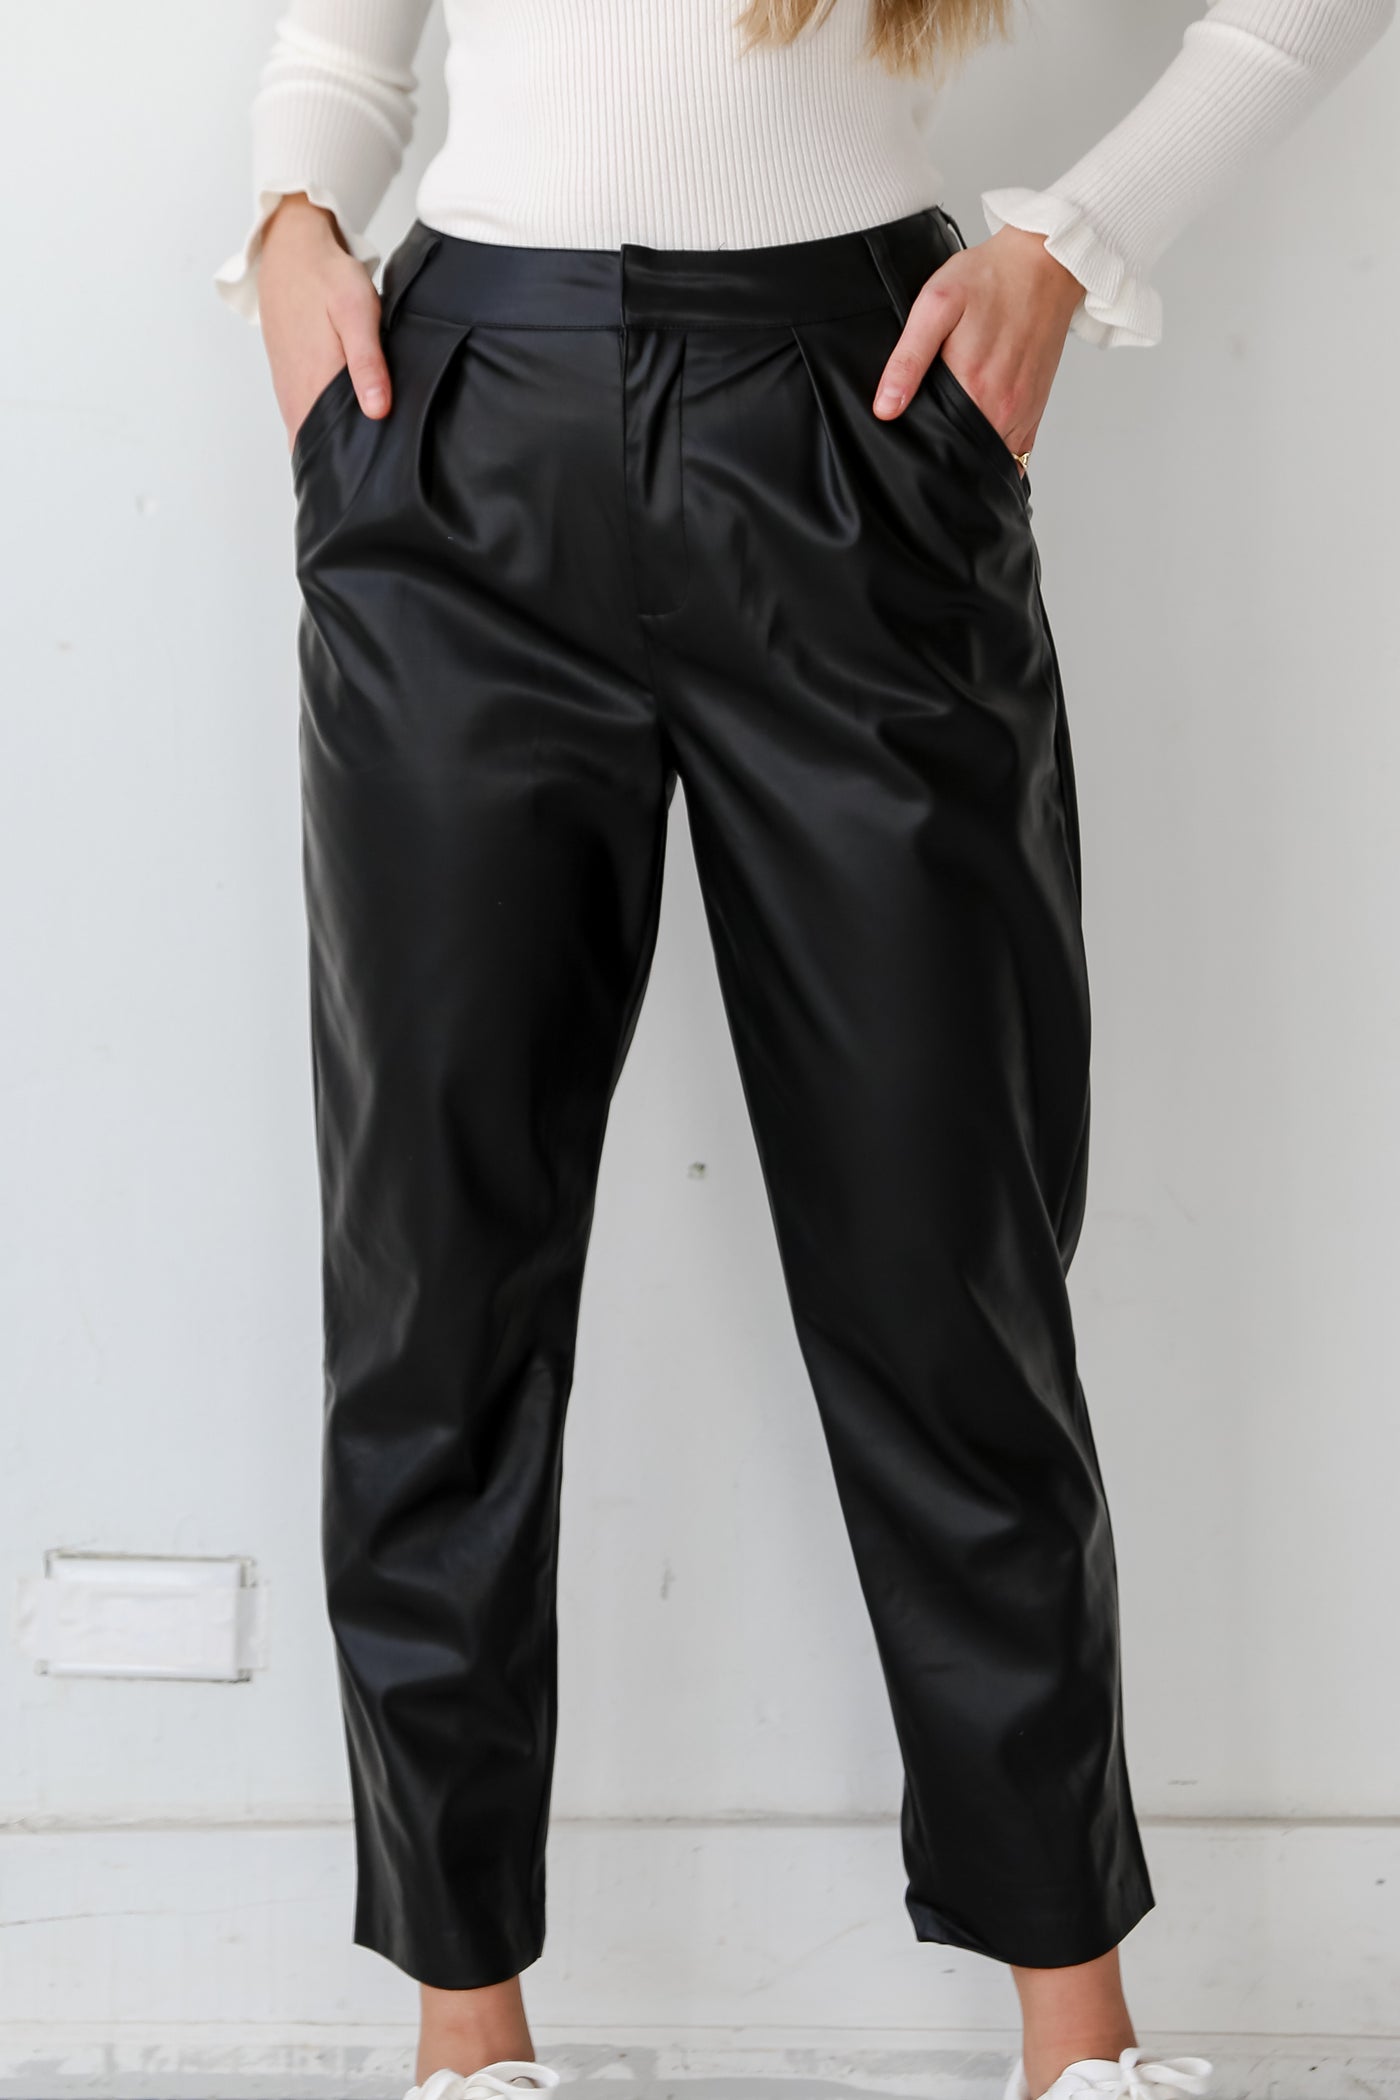 cute Black Leather Pants